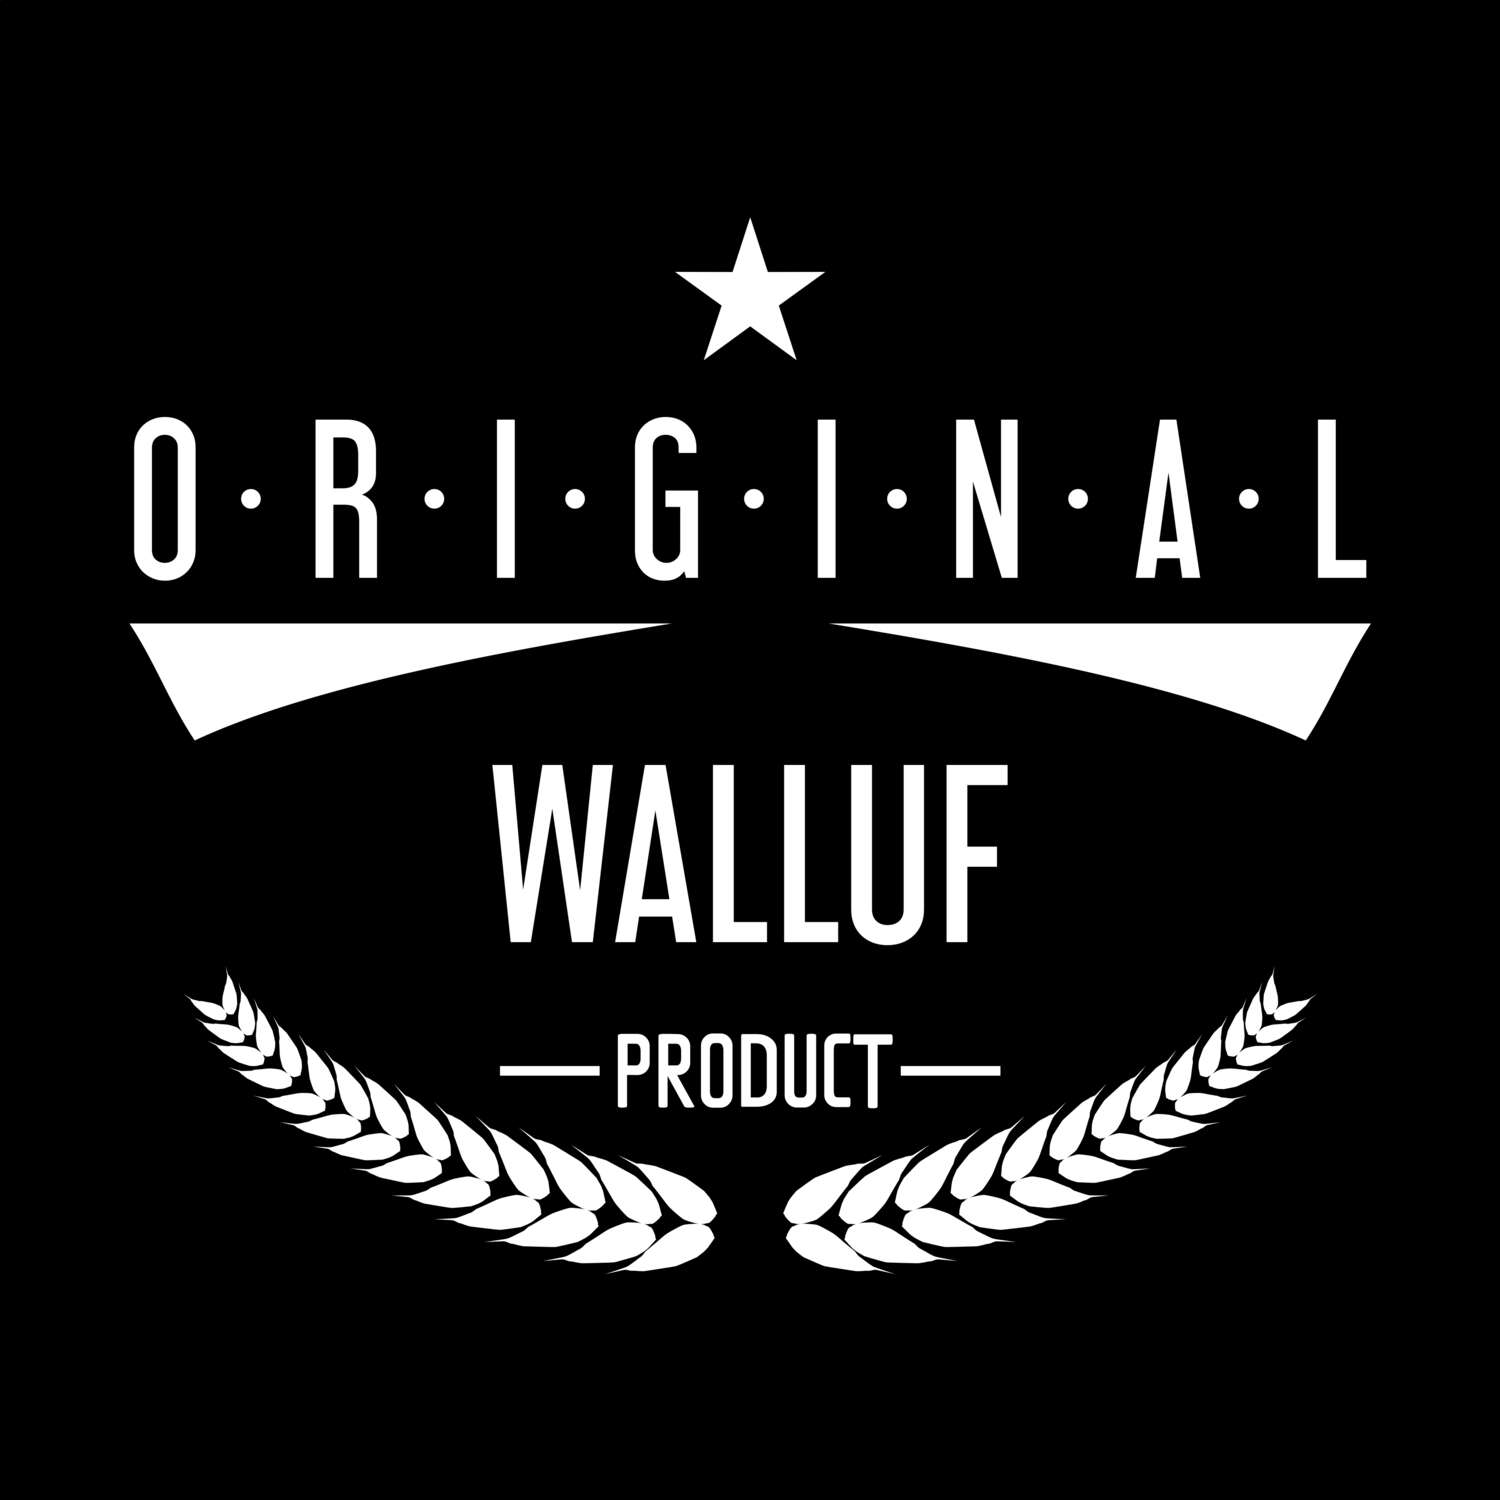 Walluf T-Shirt »Original Product«